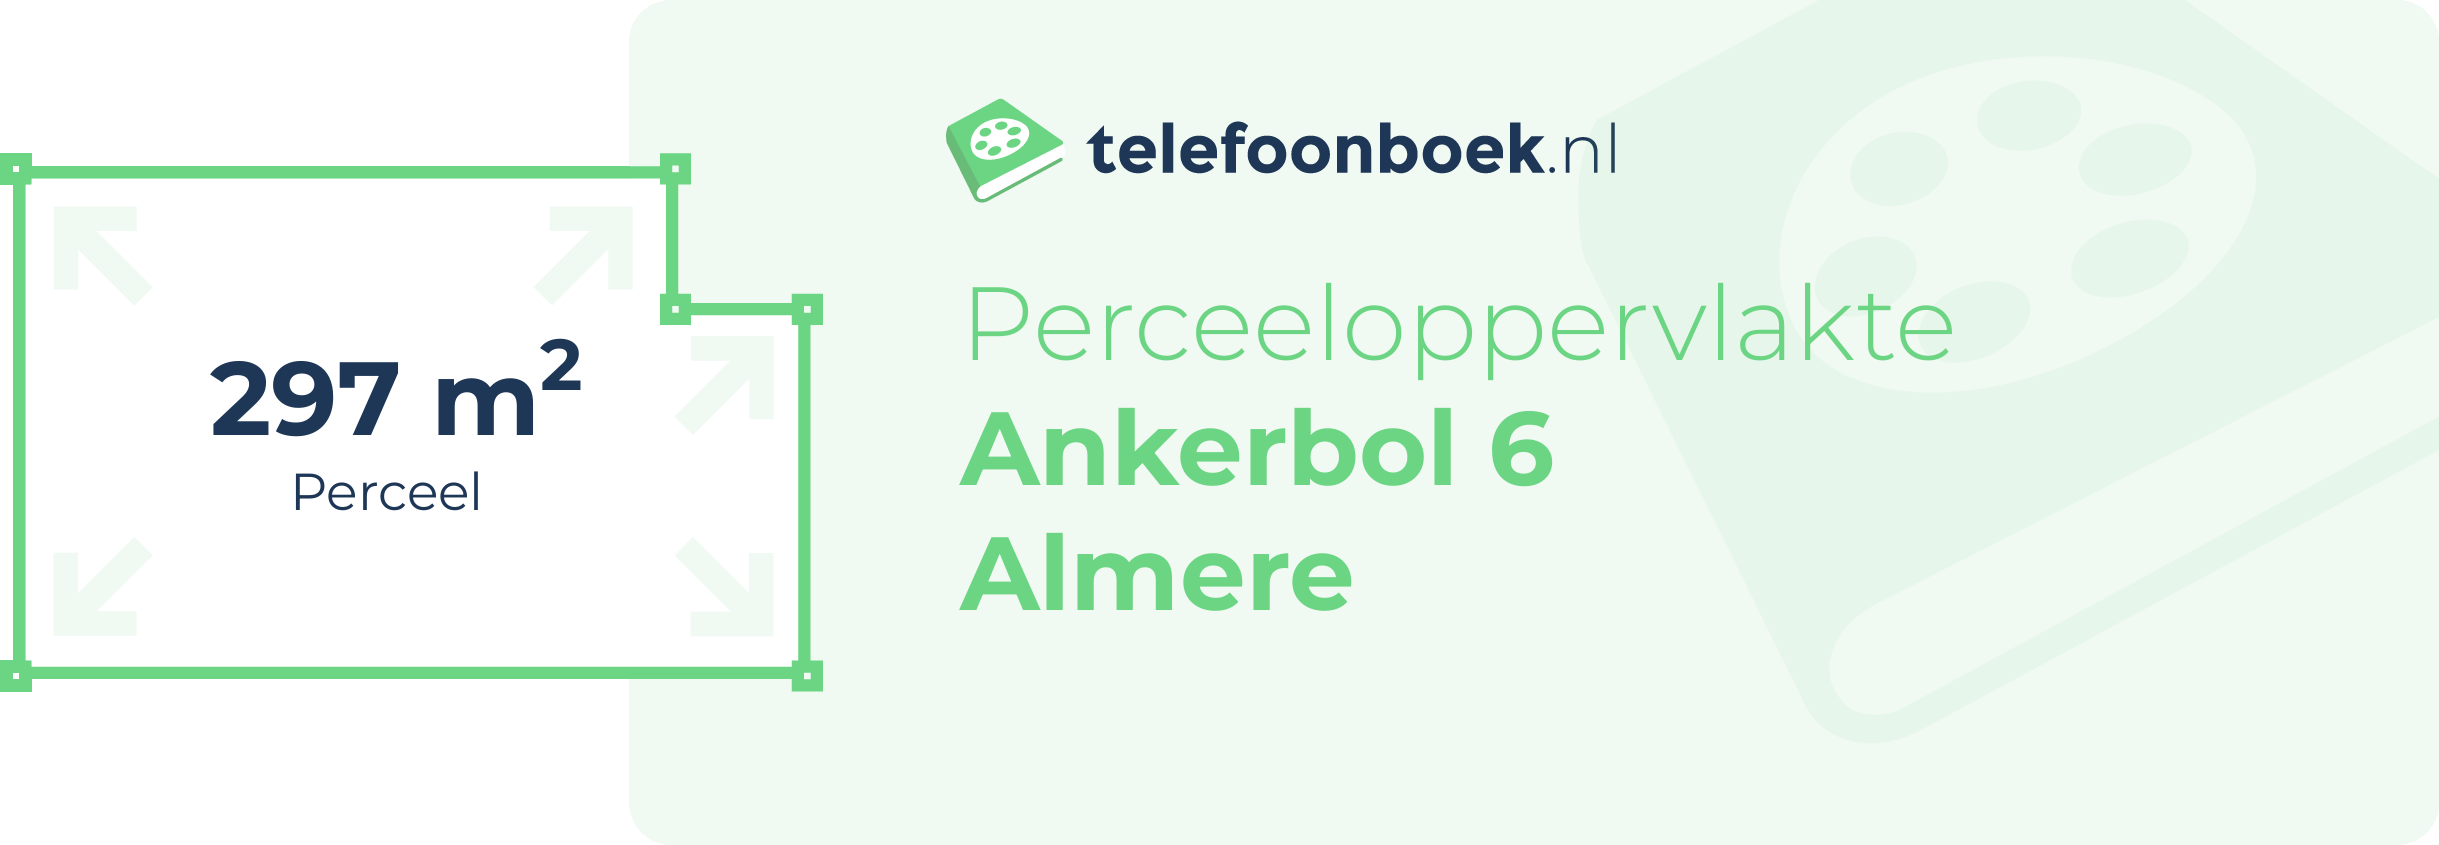 Perceeloppervlakte Ankerbol 6 Almere